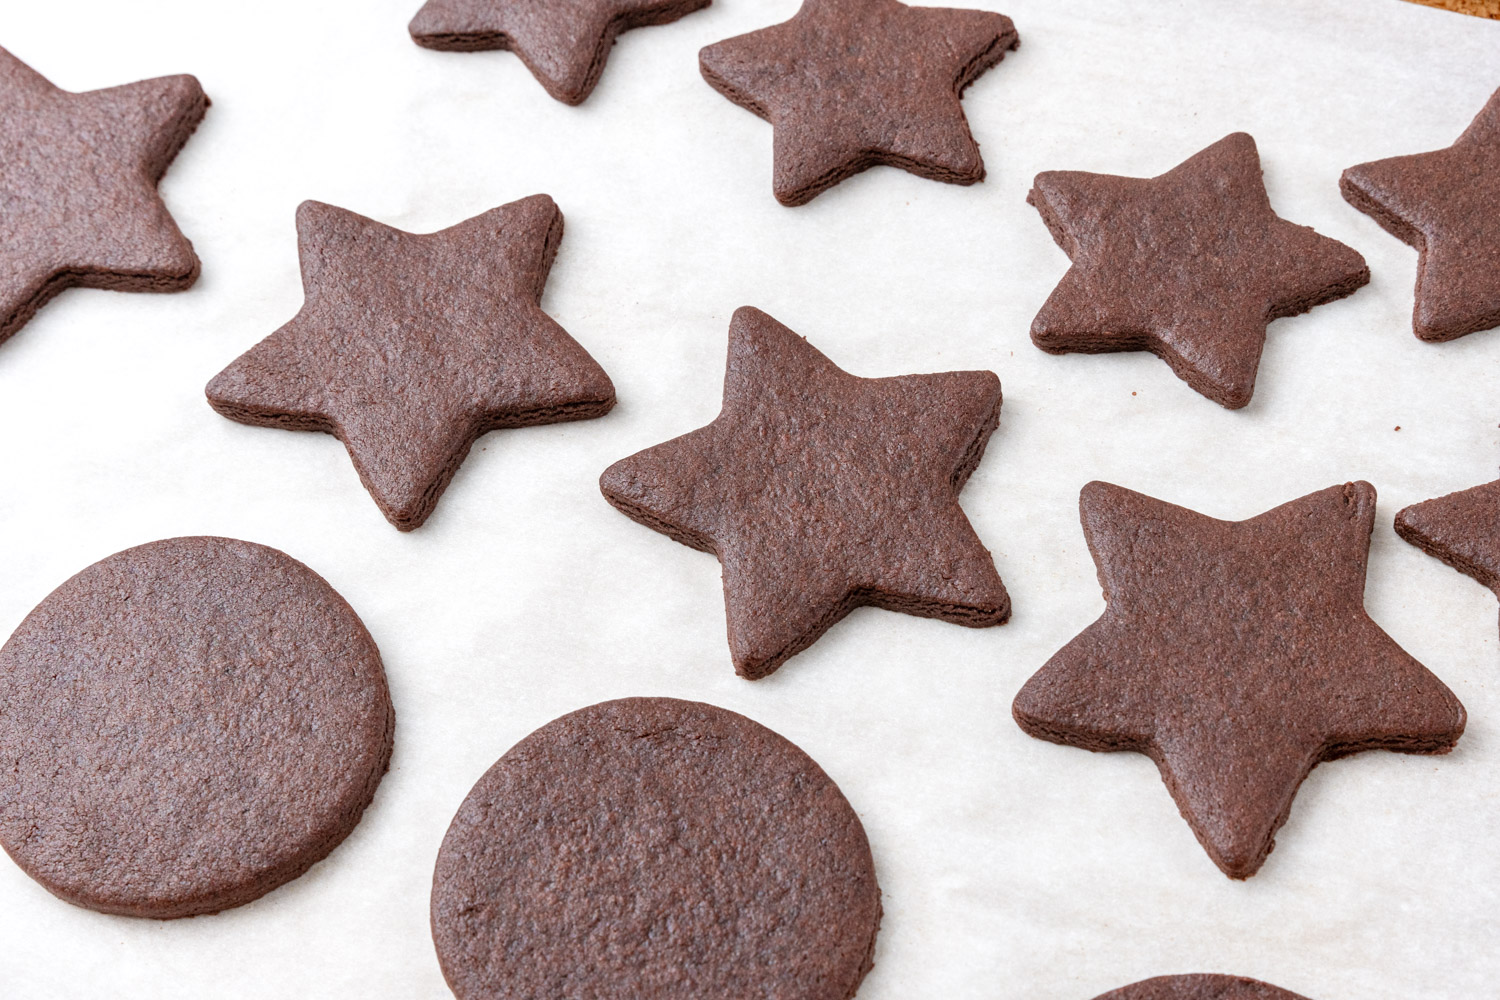 Baked chocolate sugar cookies shaped as stars and circles